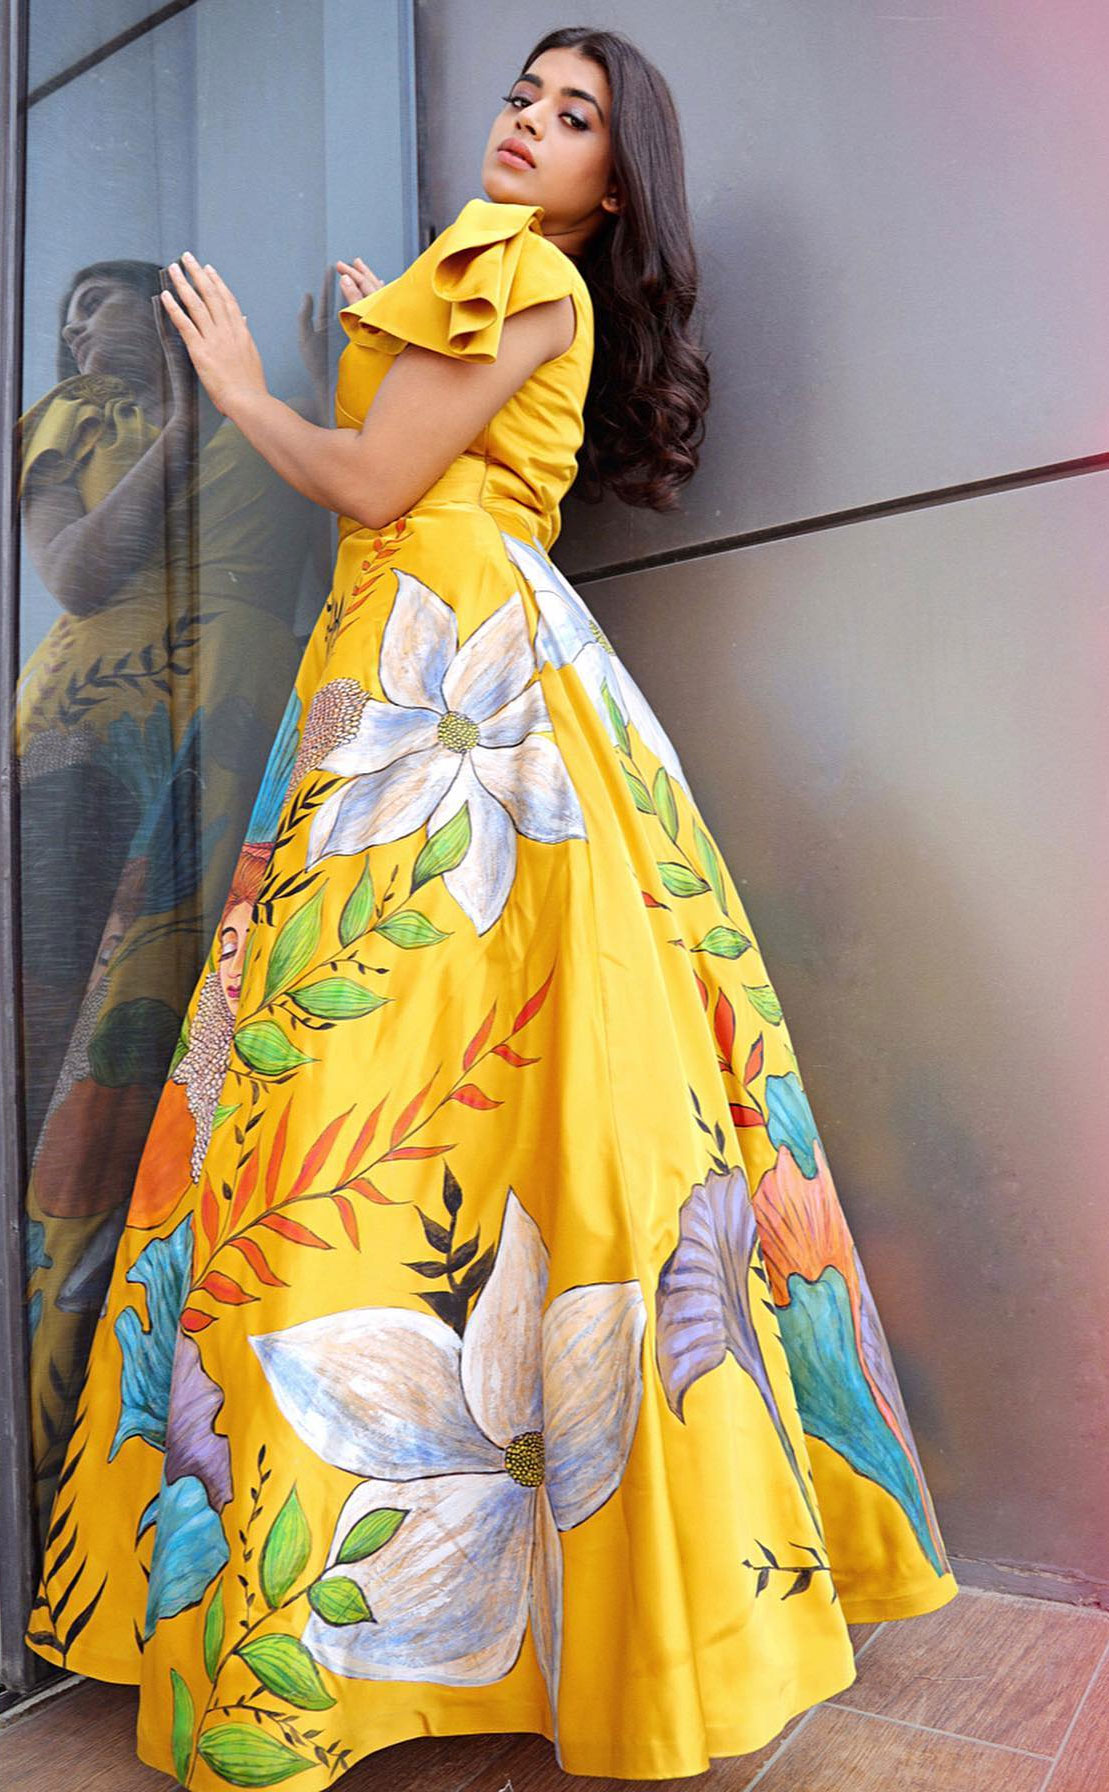 Yamini Bhaskar in Mustard yellow gown - South Indian Actress